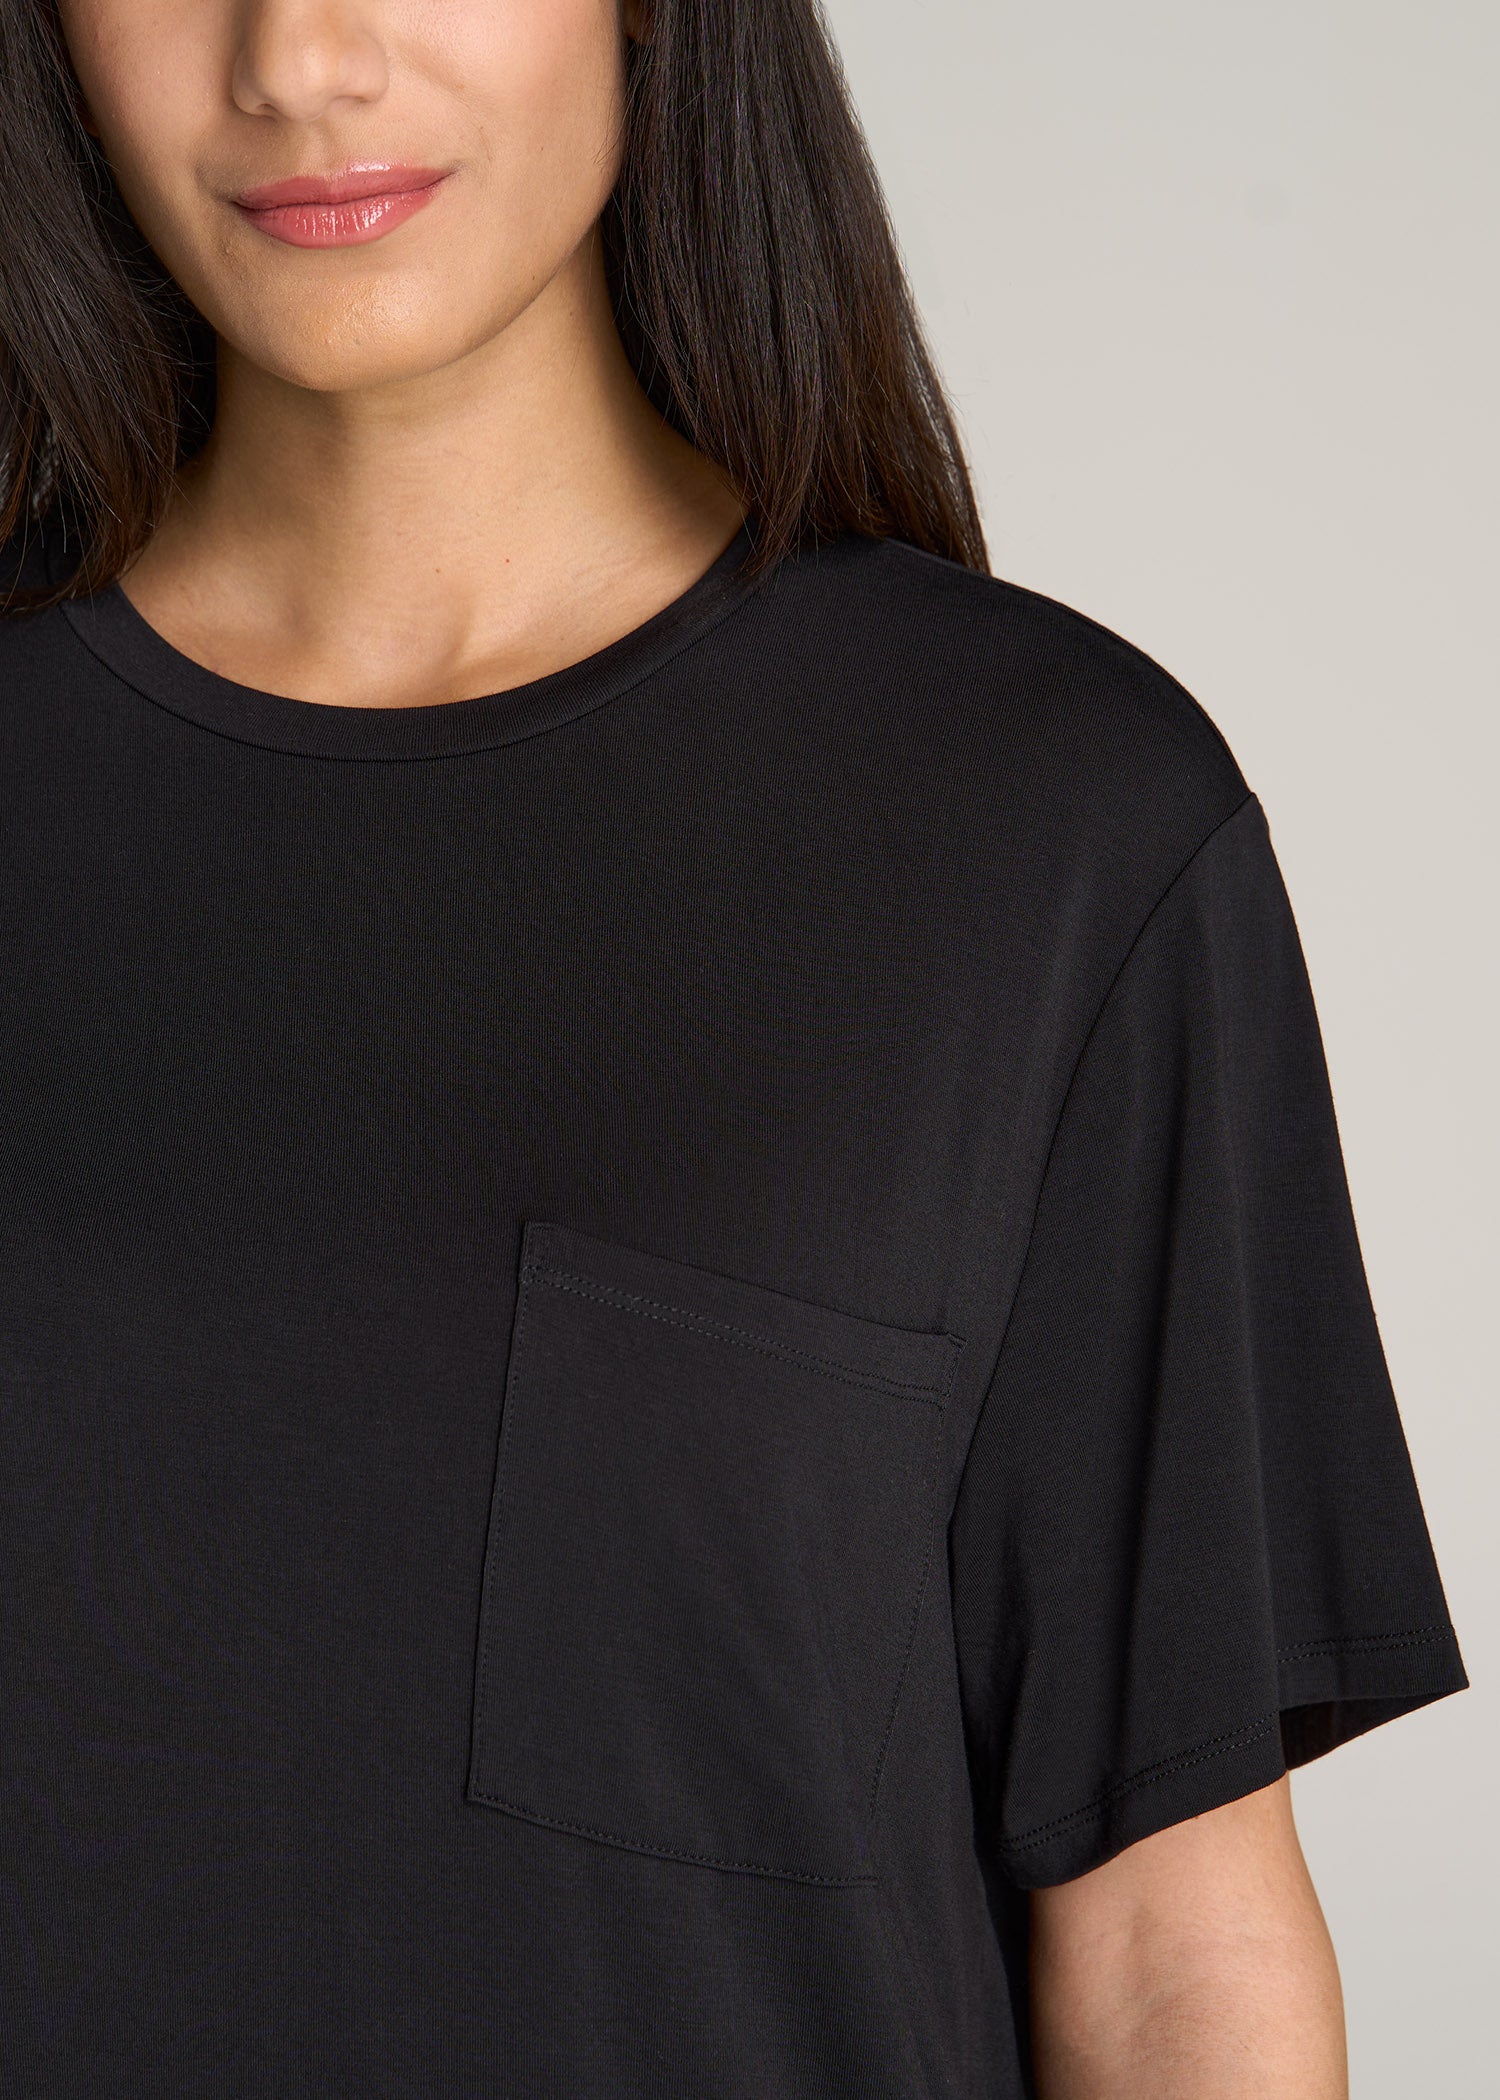 Women's Black Solid Oversized T-shirt & Women's Black Mid Rise Straigh